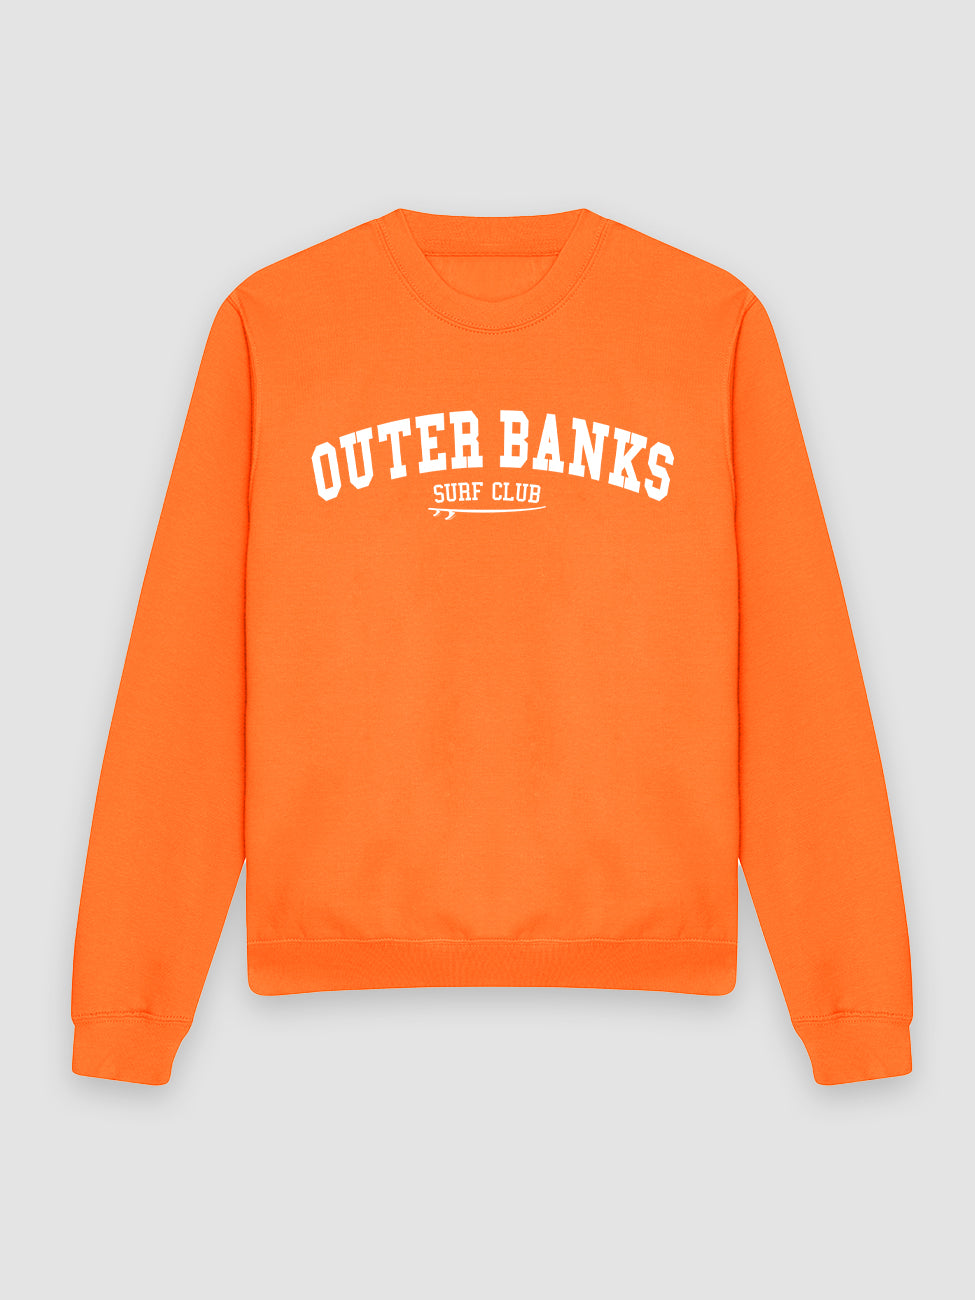 Outer Banks - Orange Sweatshirt